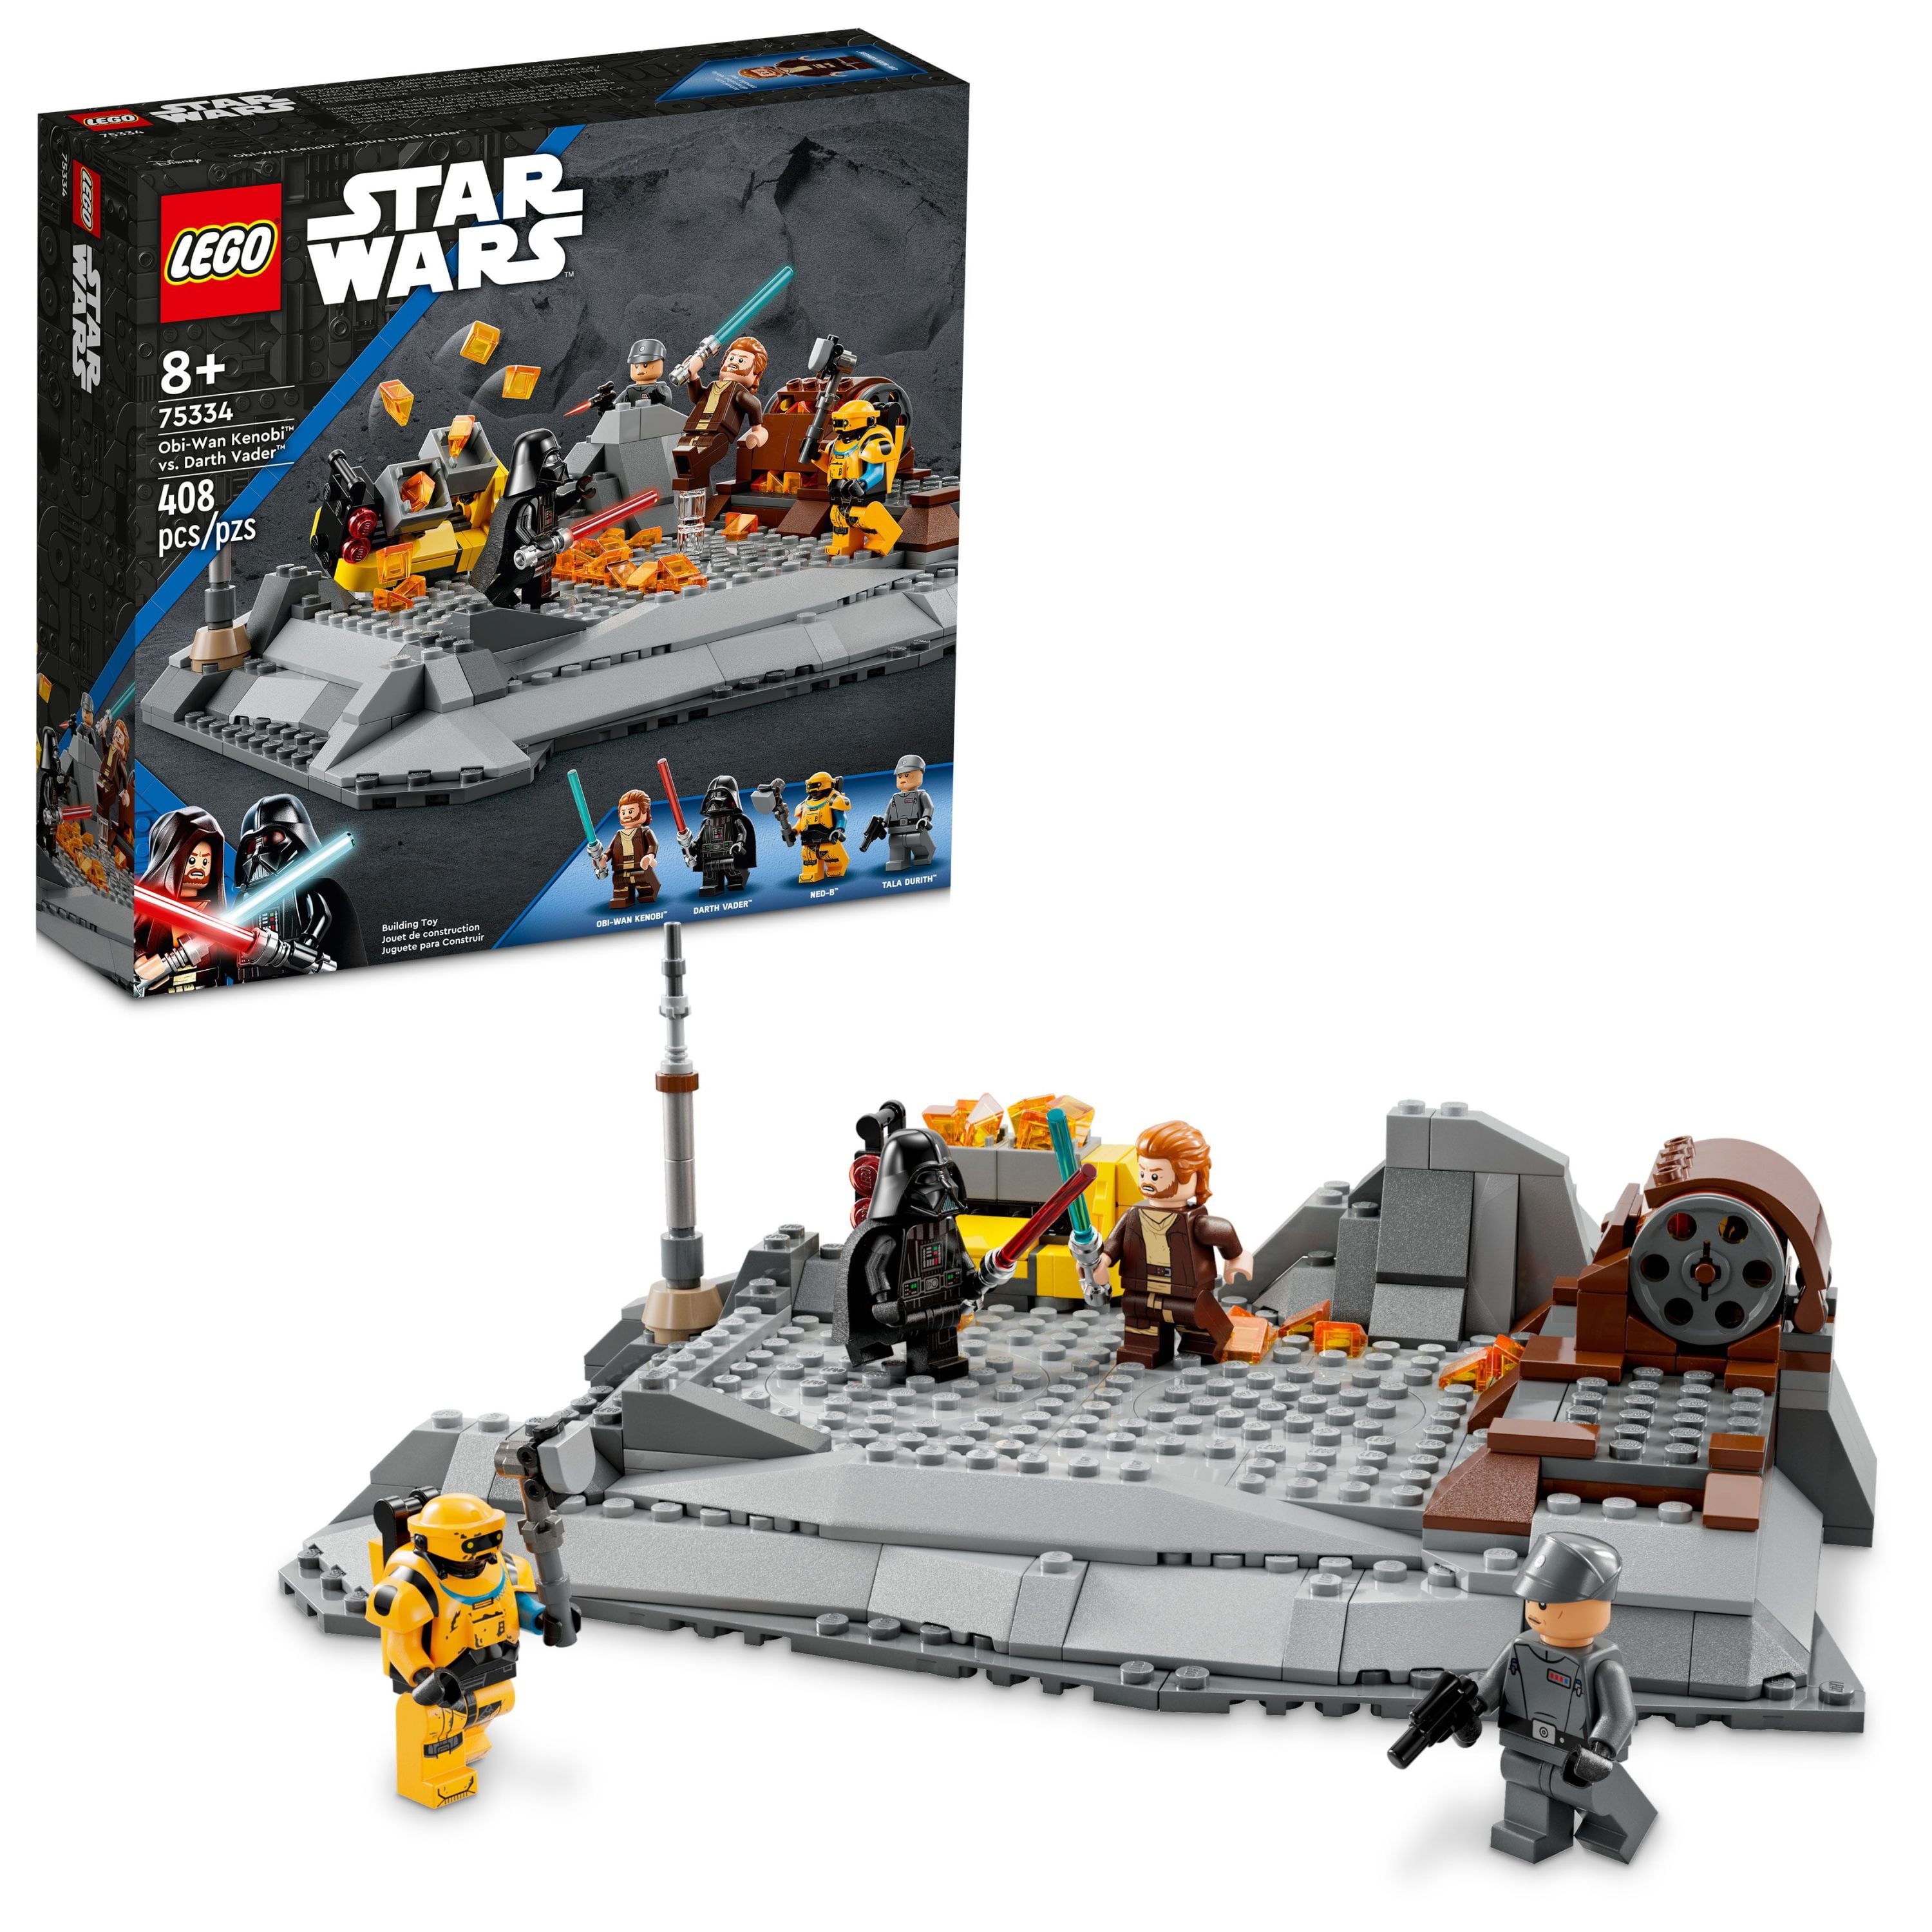 Derbeville test Trivial retort LEGO Star Wars Obi-Wan Kenobi vs. Darth Vader 75334, Buildable Action Toy,  Battlefield Playset with 4 Minifigures and Lightsabers, Collectible Set -  Walmart.com